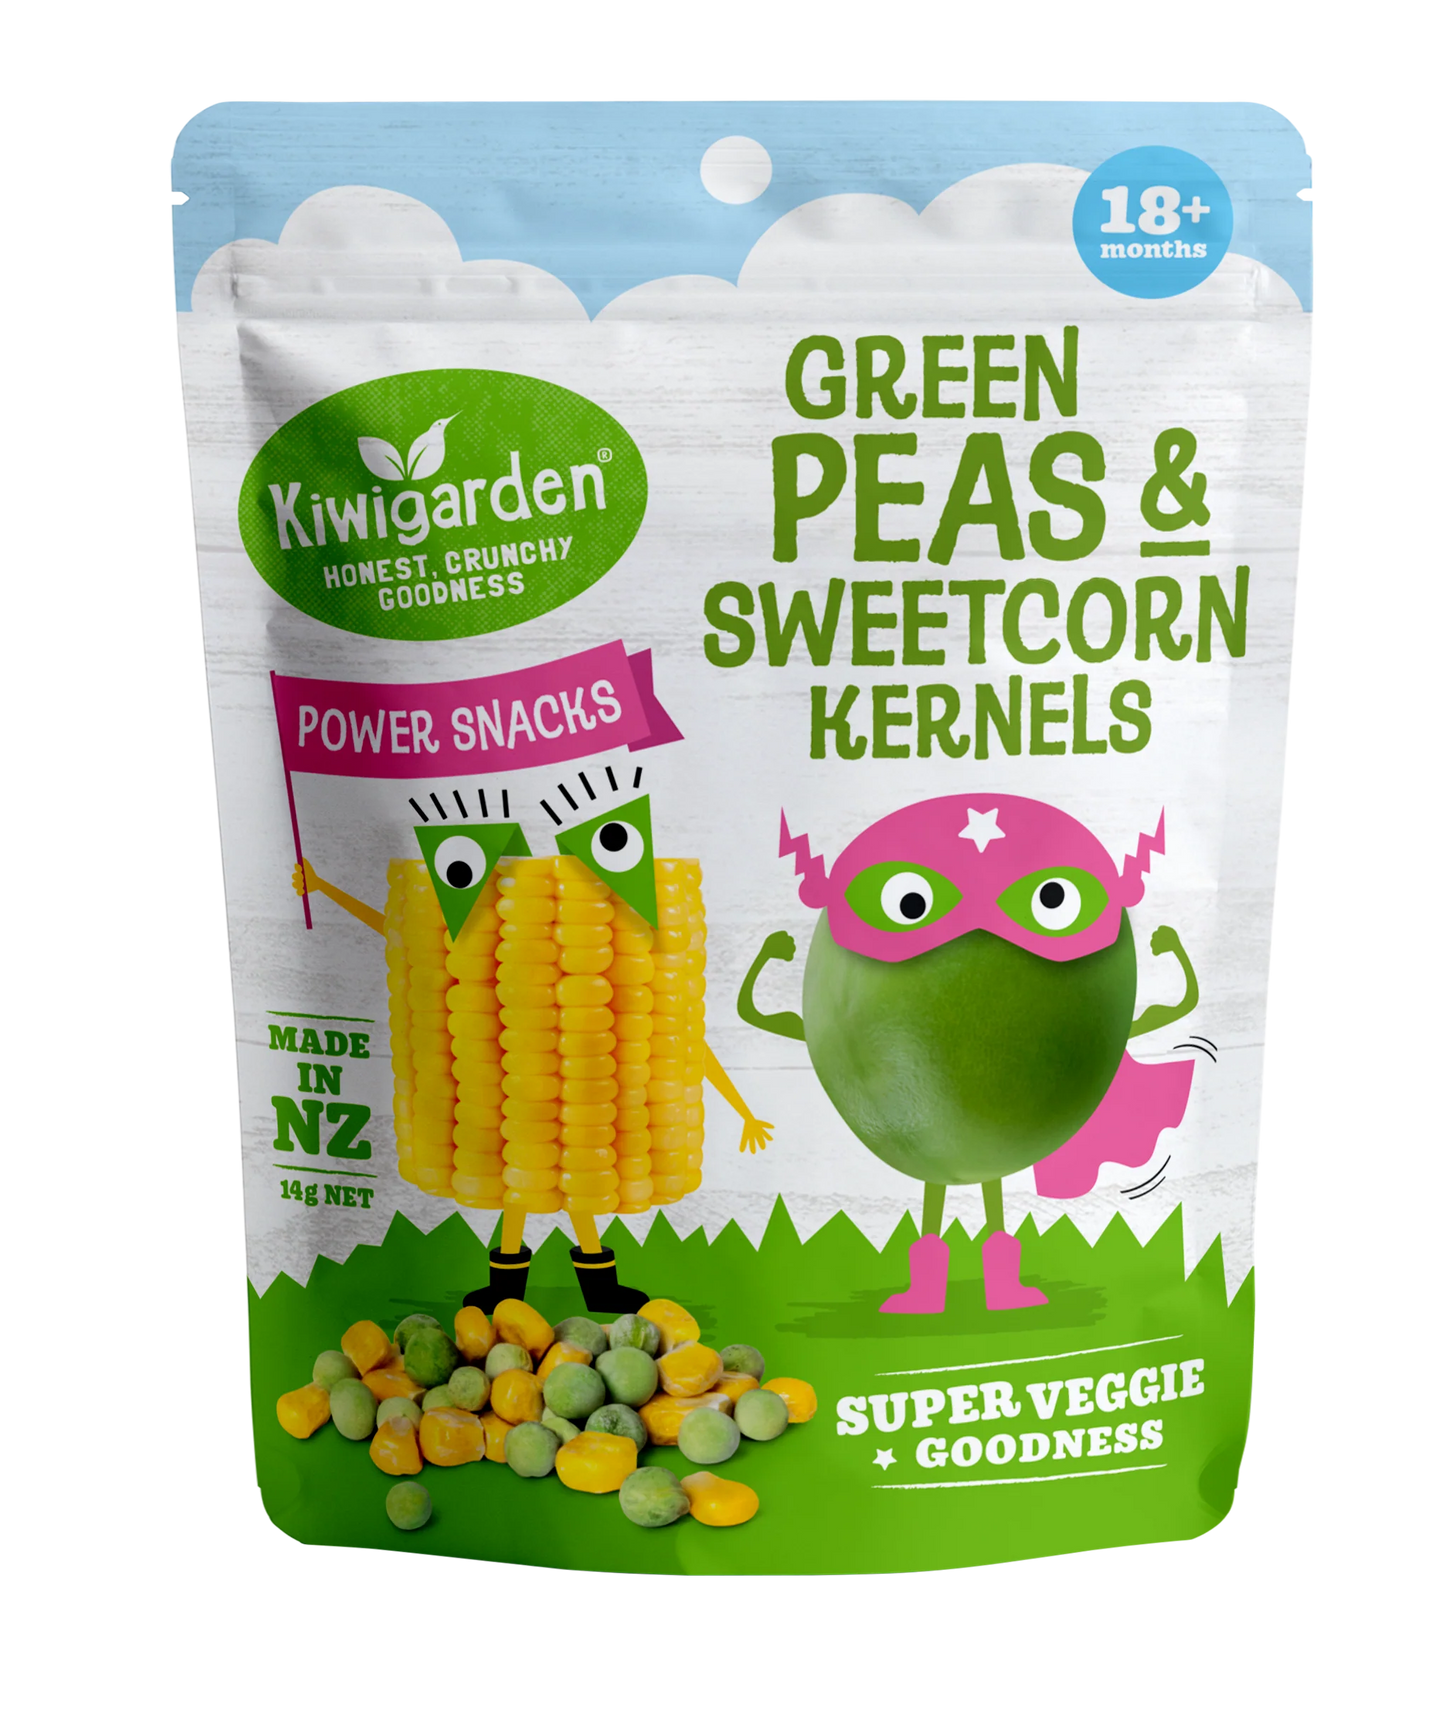 Kiwigarden Green Peas and Sweetcorn Kernels, 14g.